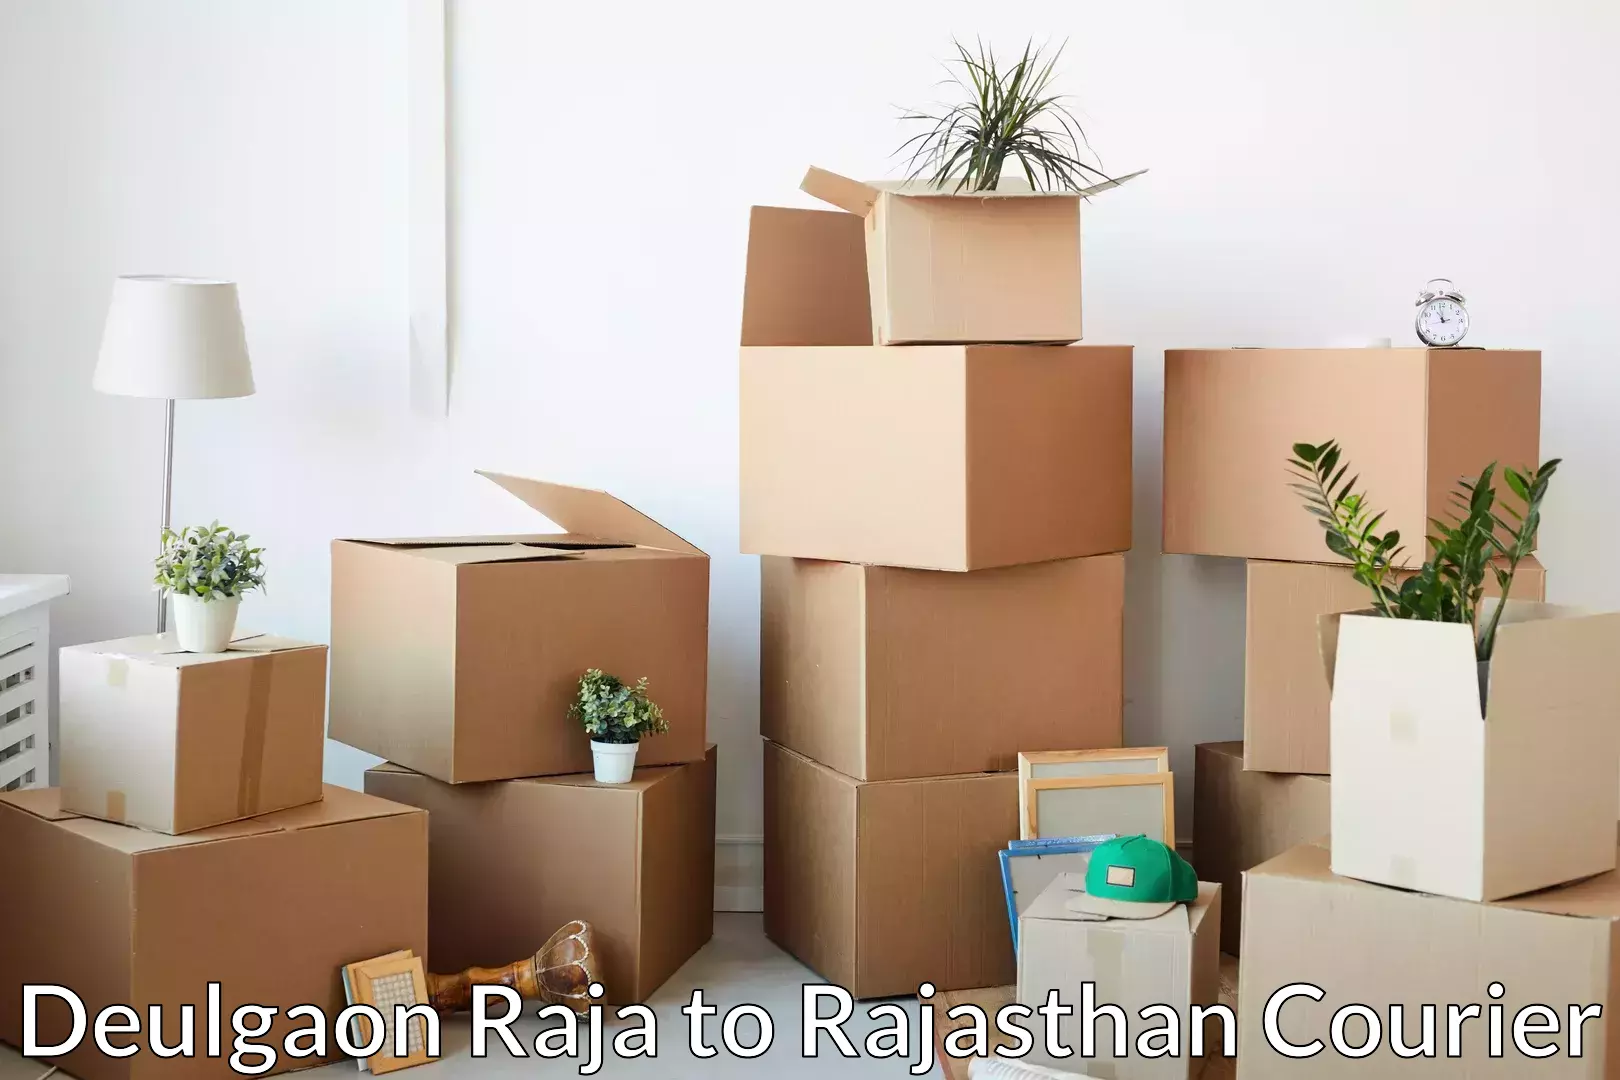 Furniture relocation experts Deulgaon Raja to Ajmer